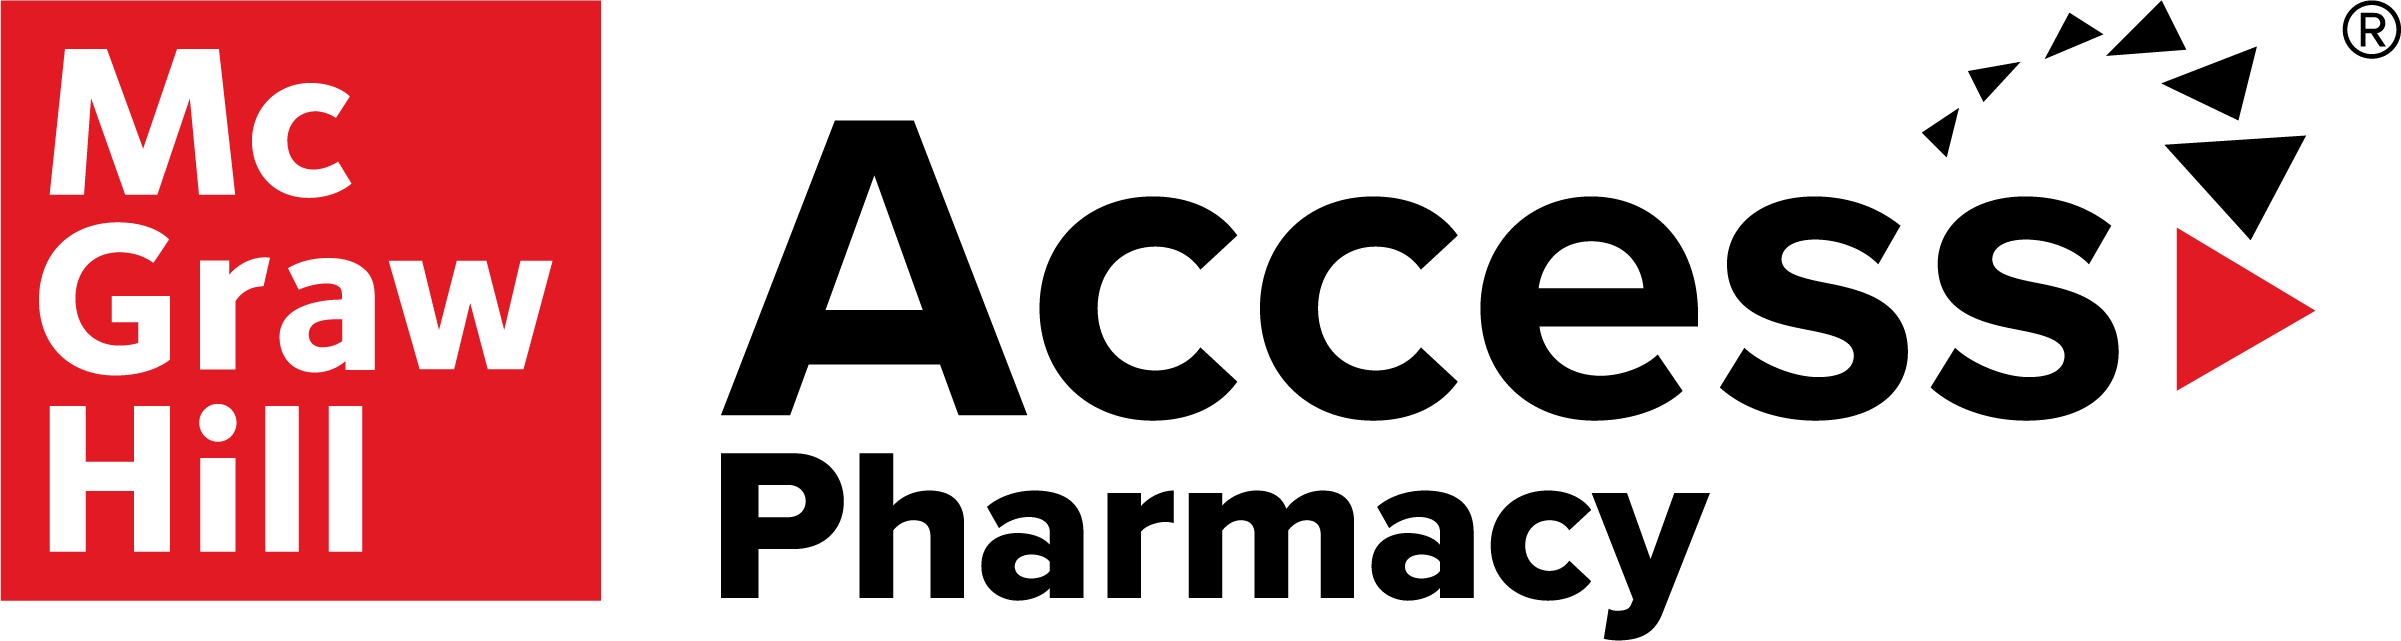 McGraw Hill Access Pharmacy